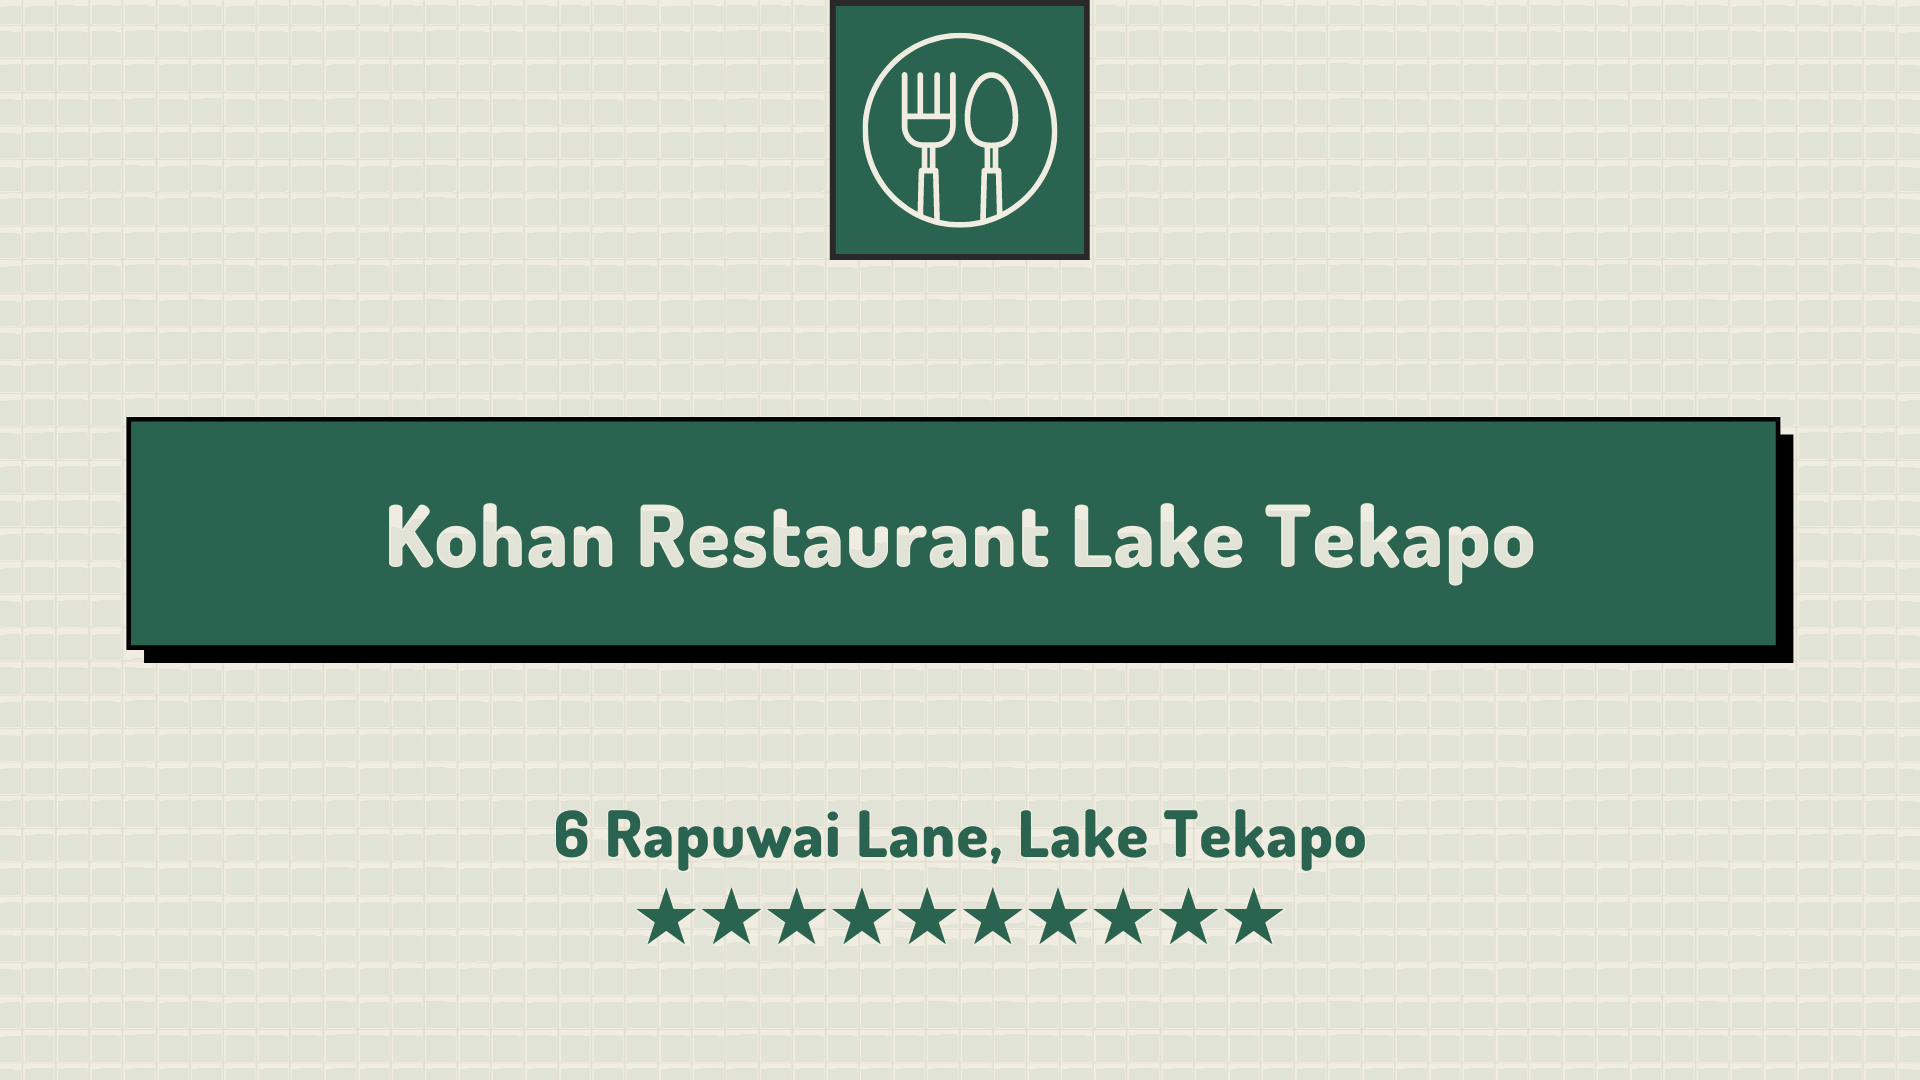 Kohan Restaurant Lake Tekapo